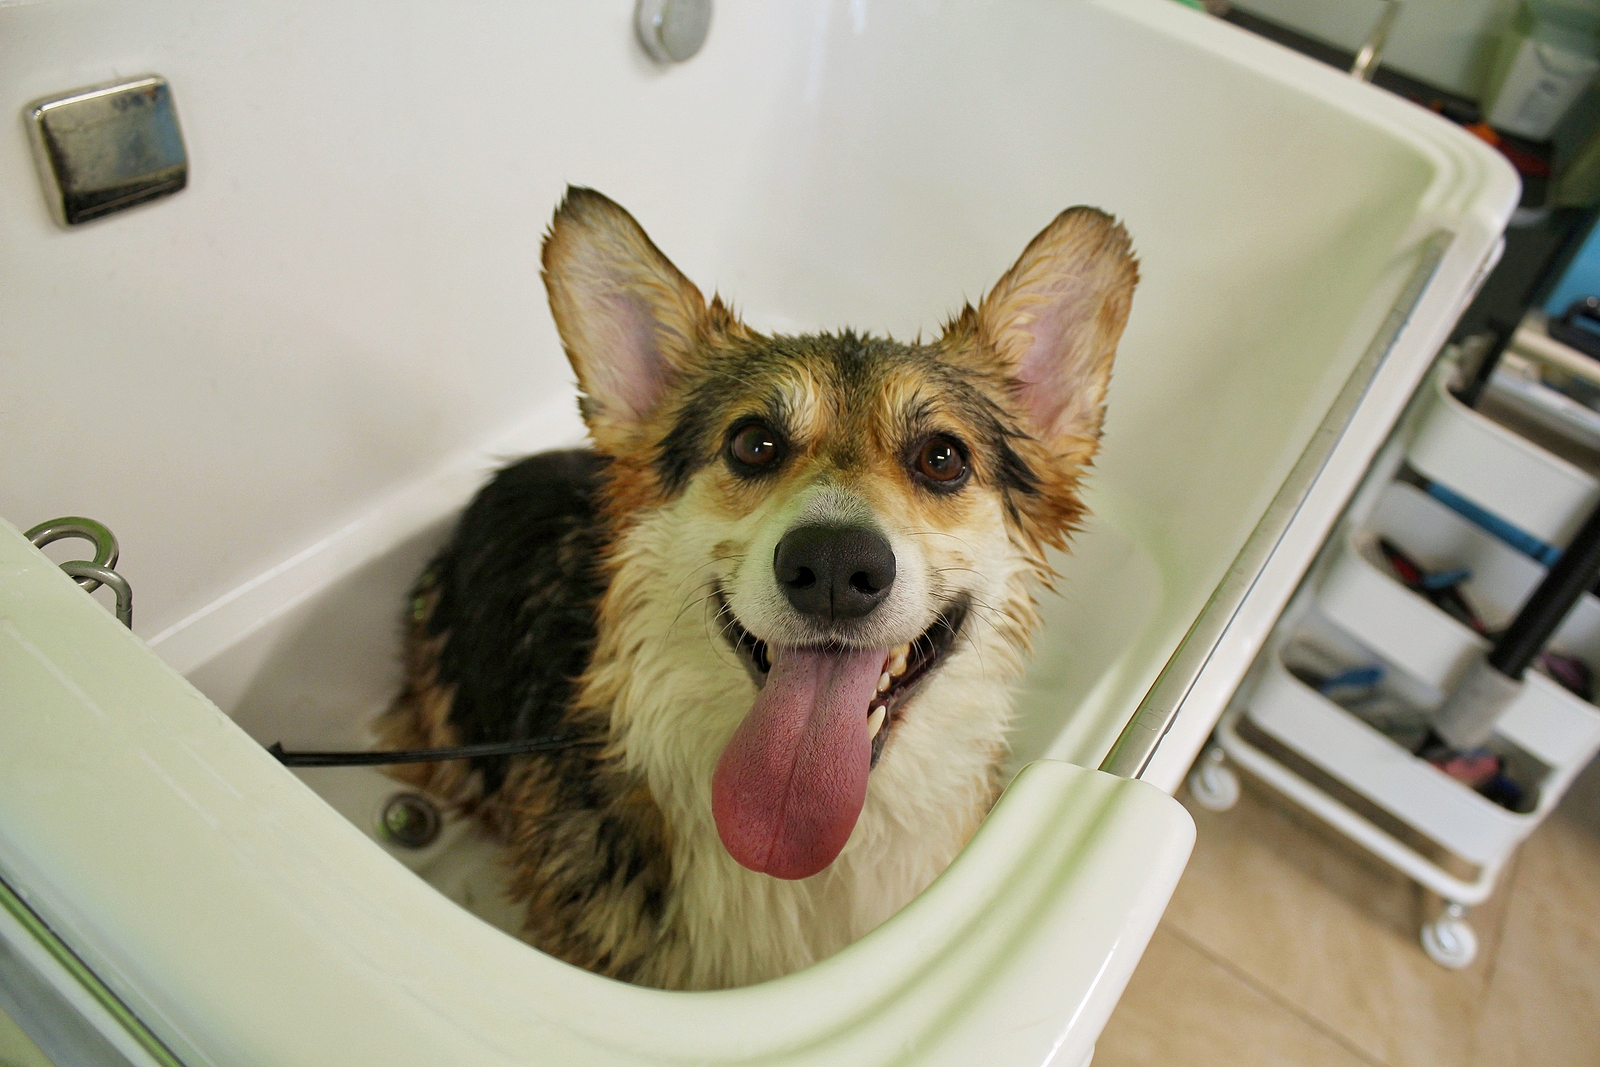 Ozone bath treatment for your dog